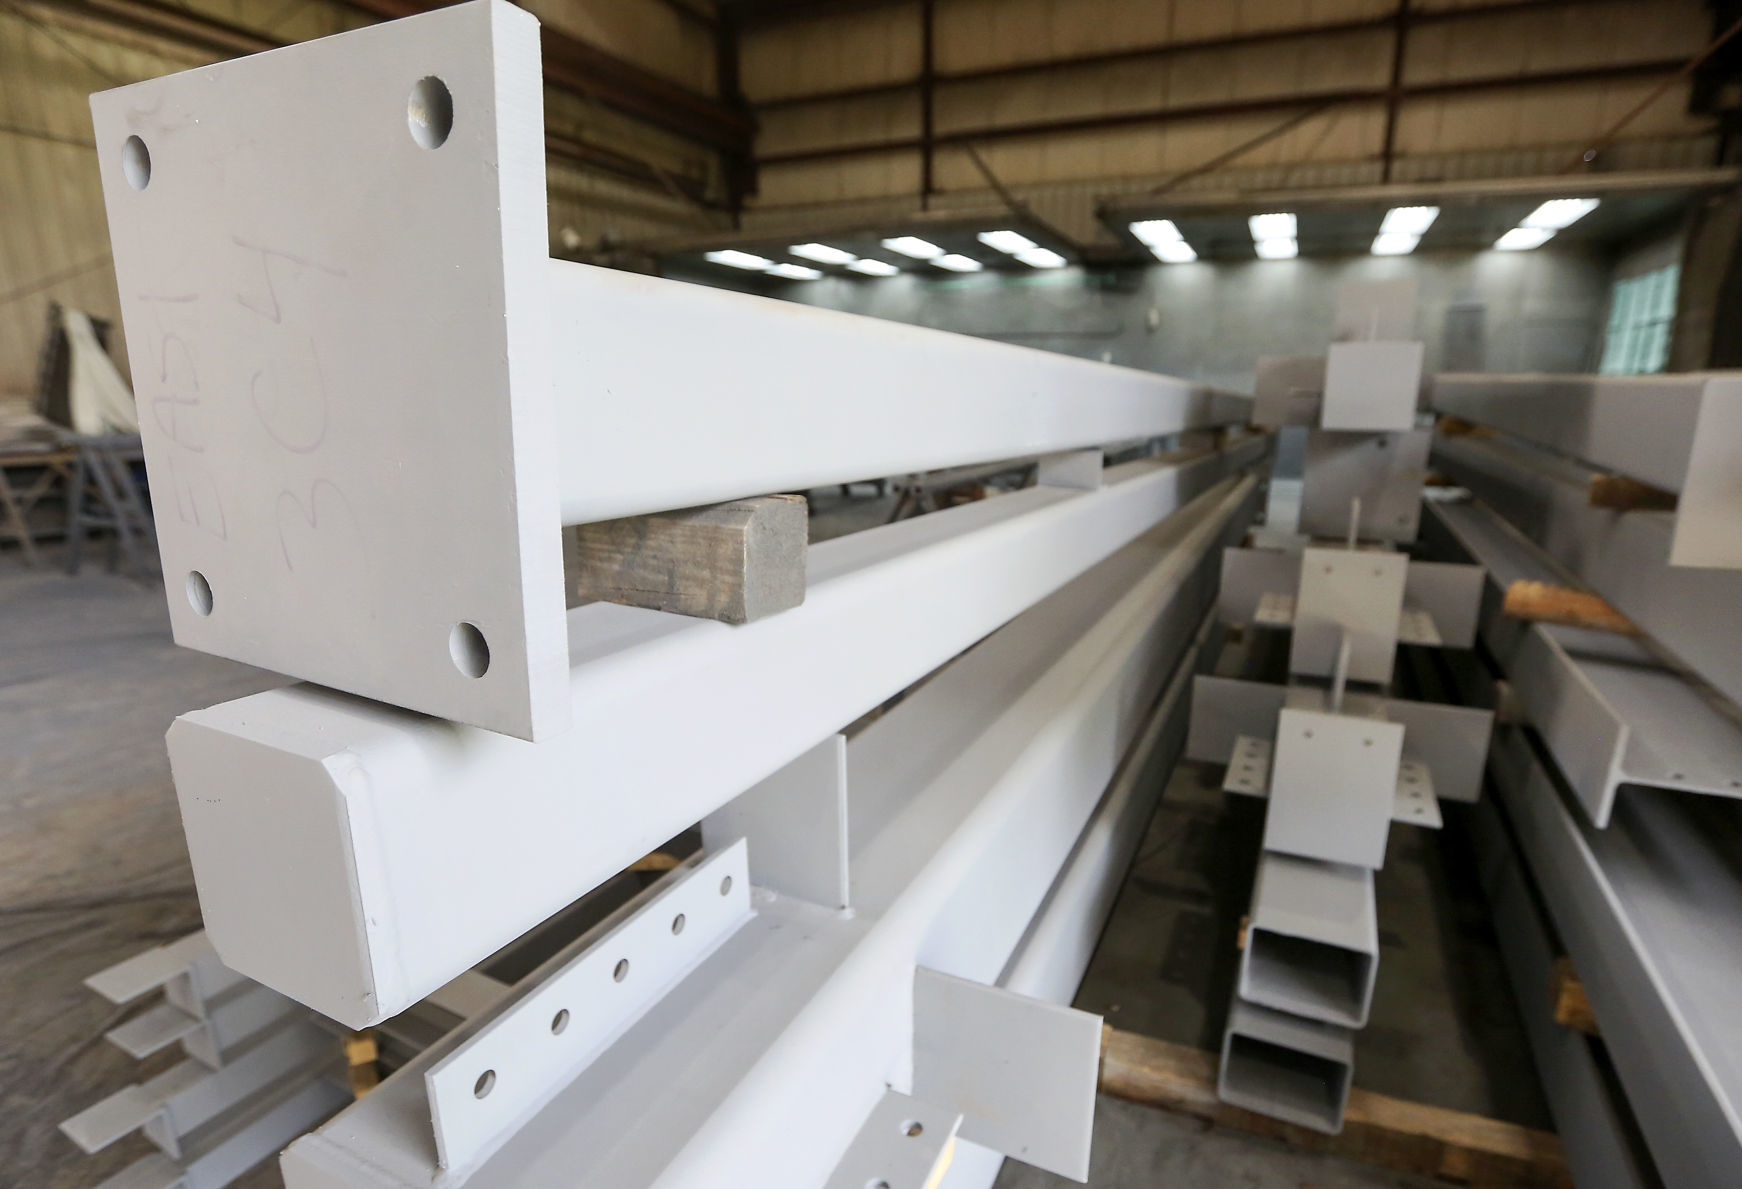 Steel columns fabricated at E.J. Voggenthaler Co. in Dubuque. Photo taken on Wednesday, June 27, 2018.    PHOTO CREDIT: NICKI KOHL